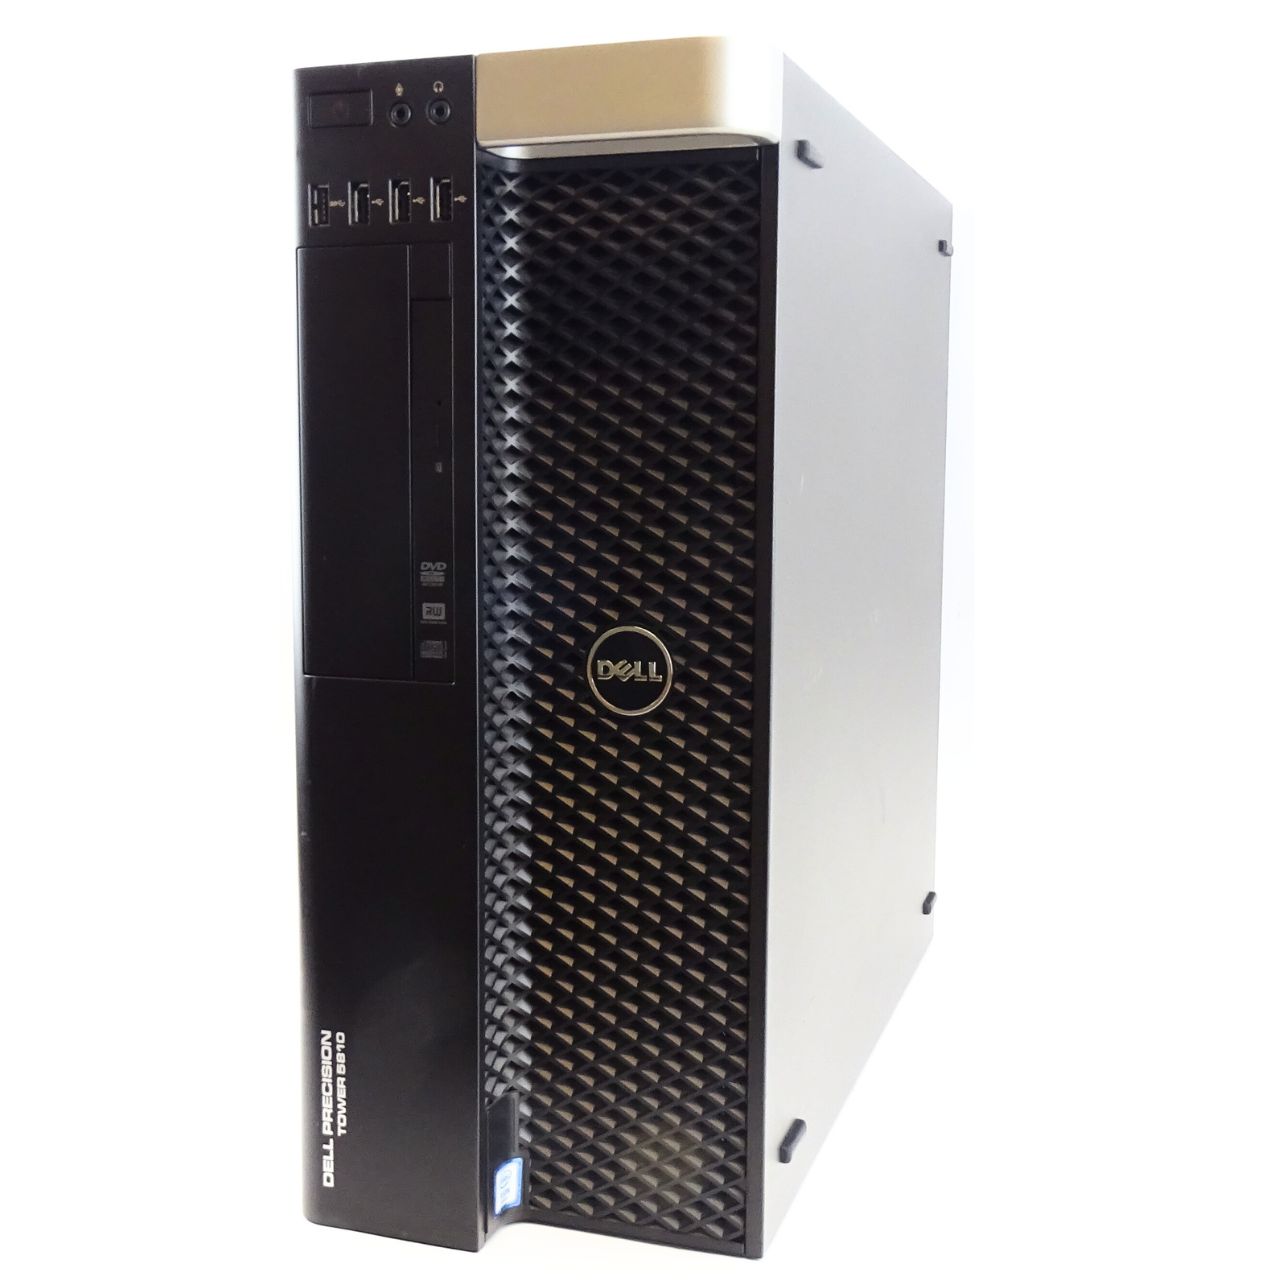 Dell Precision T5810 - Tower - Intel Xeon 1620 v3 @ 3,5 GHz - 16 GB - 256 GB SSD - DVD-RW - Quadro K4200 - Windows 10 Professional - Sehr gut